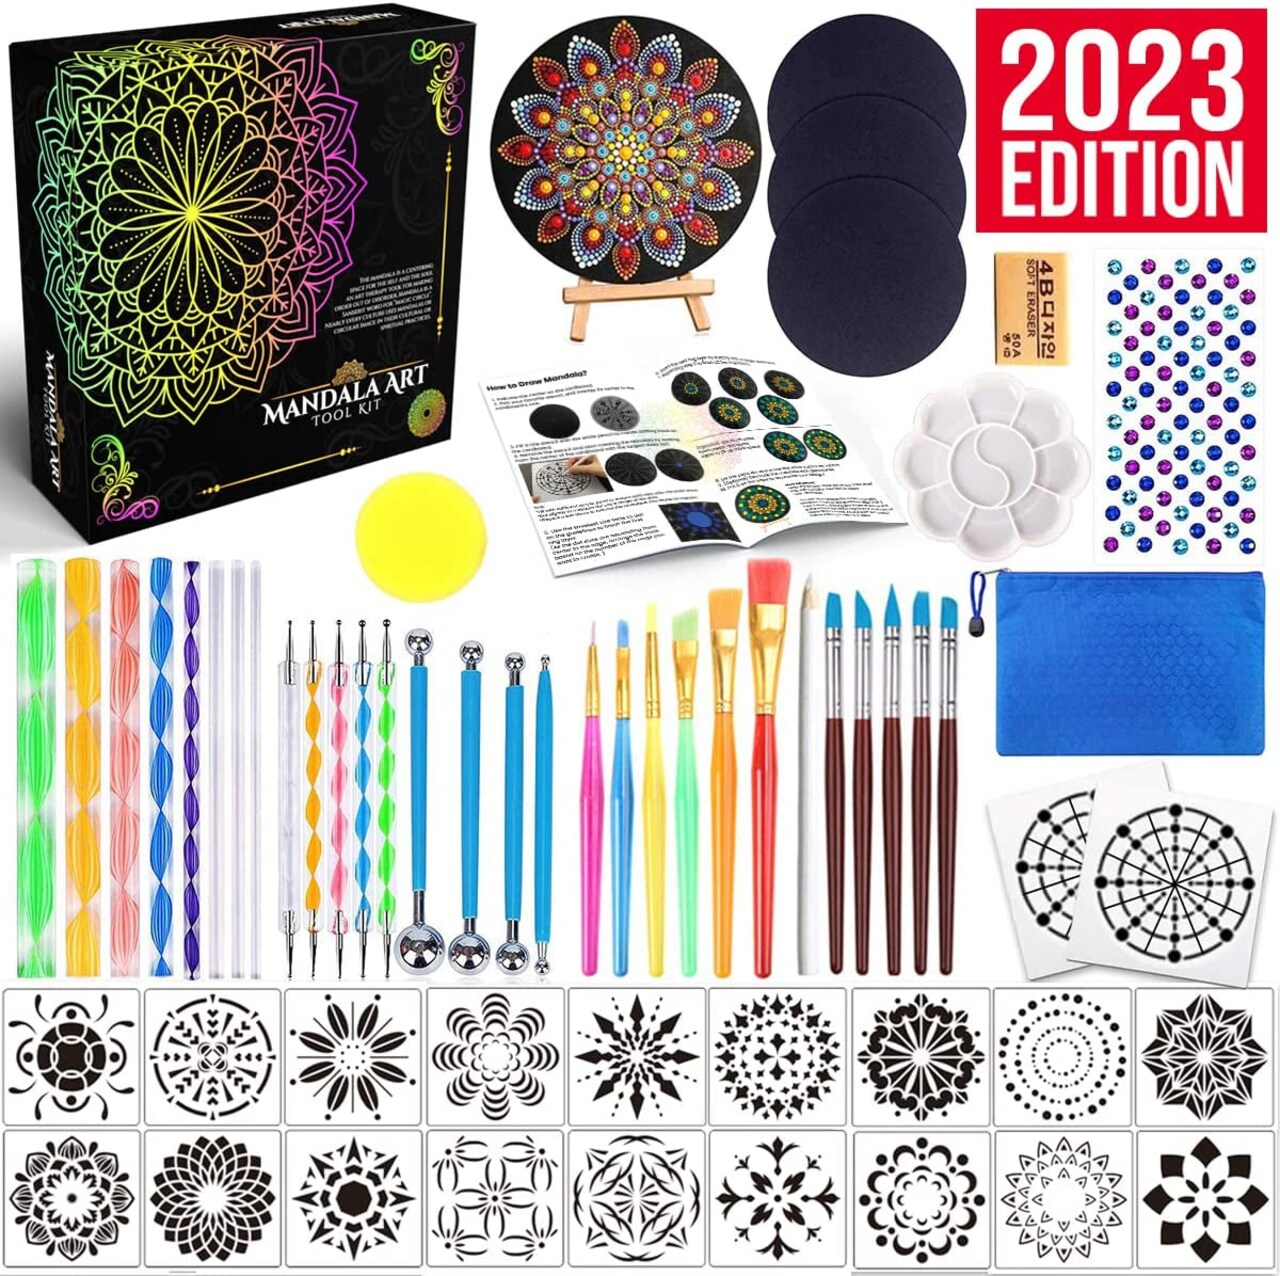 Mandala Dotting Tools Painting Kit - Rock Dot Paint Stencils Tool Set Art  Craft Supplies Kits Tray